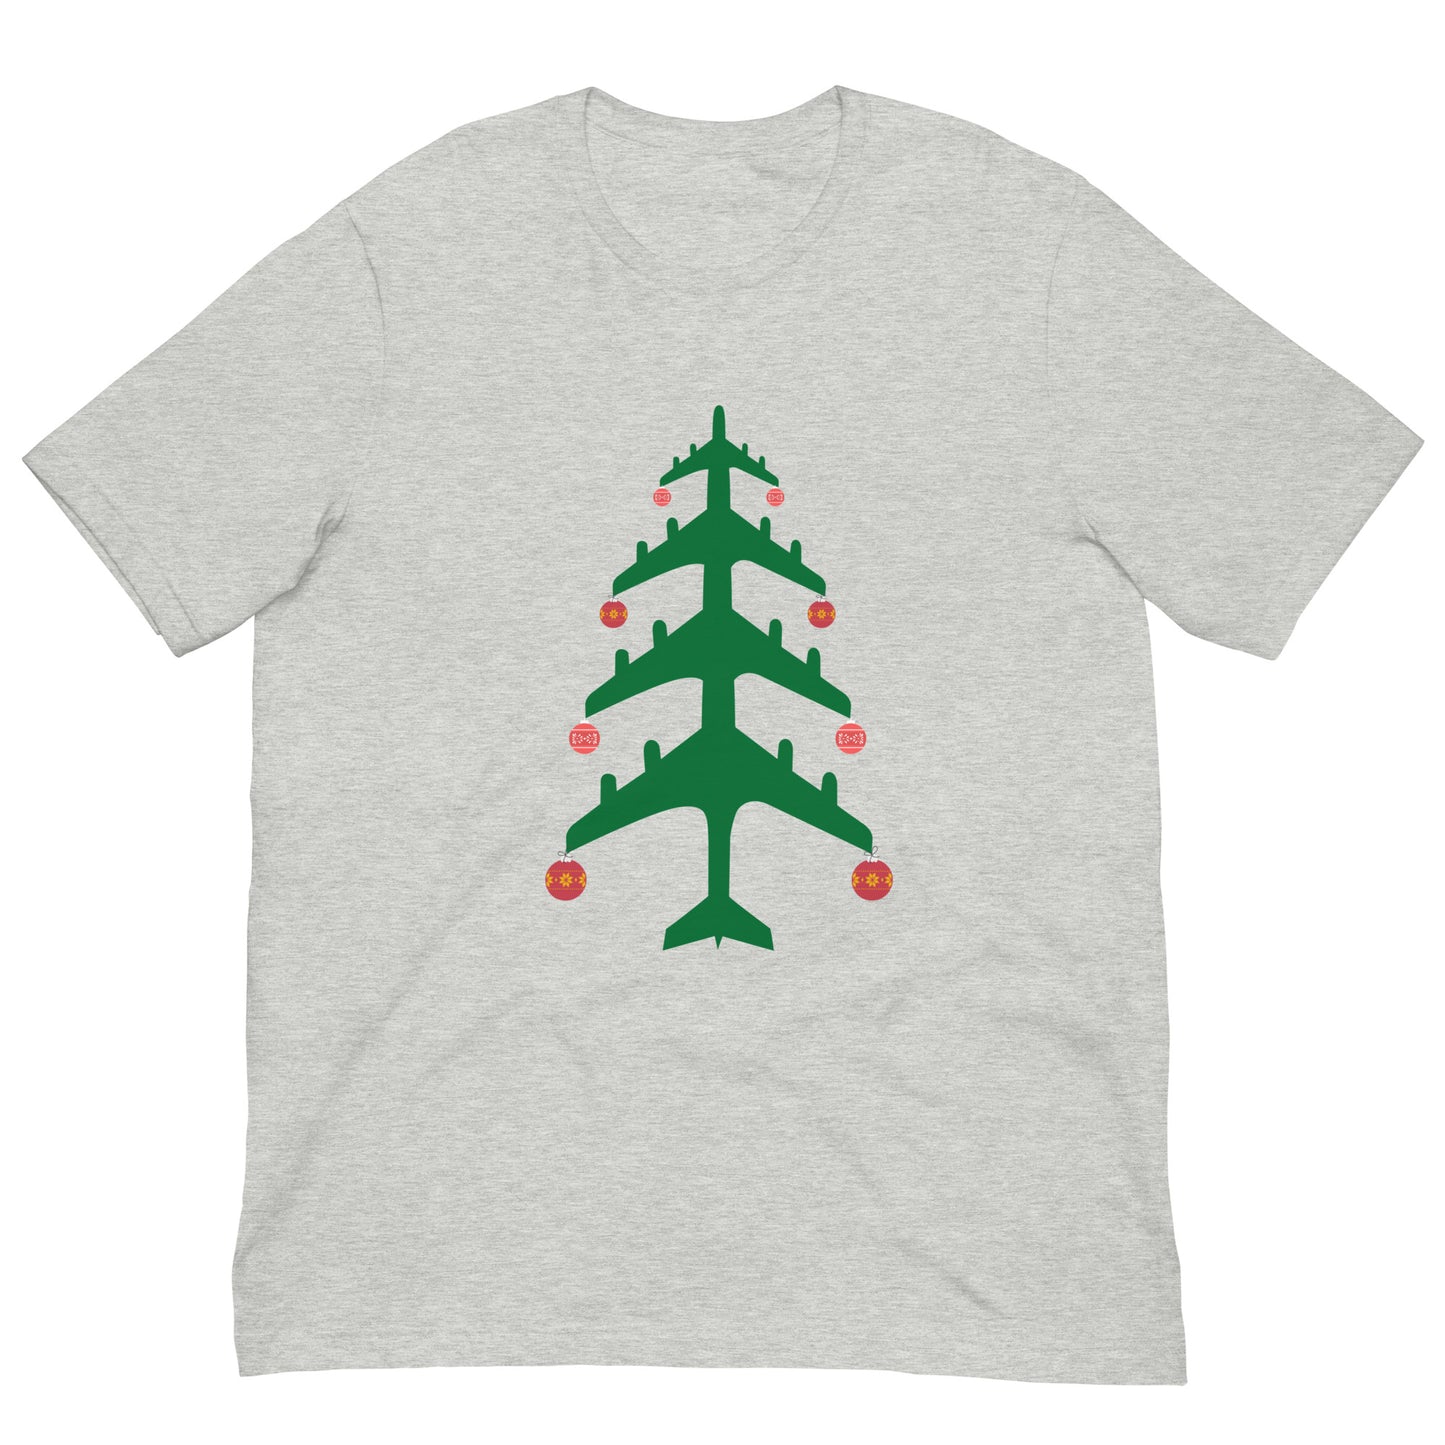 Airplane Christmas Tree Tee - UNISEX - 4 COLORS